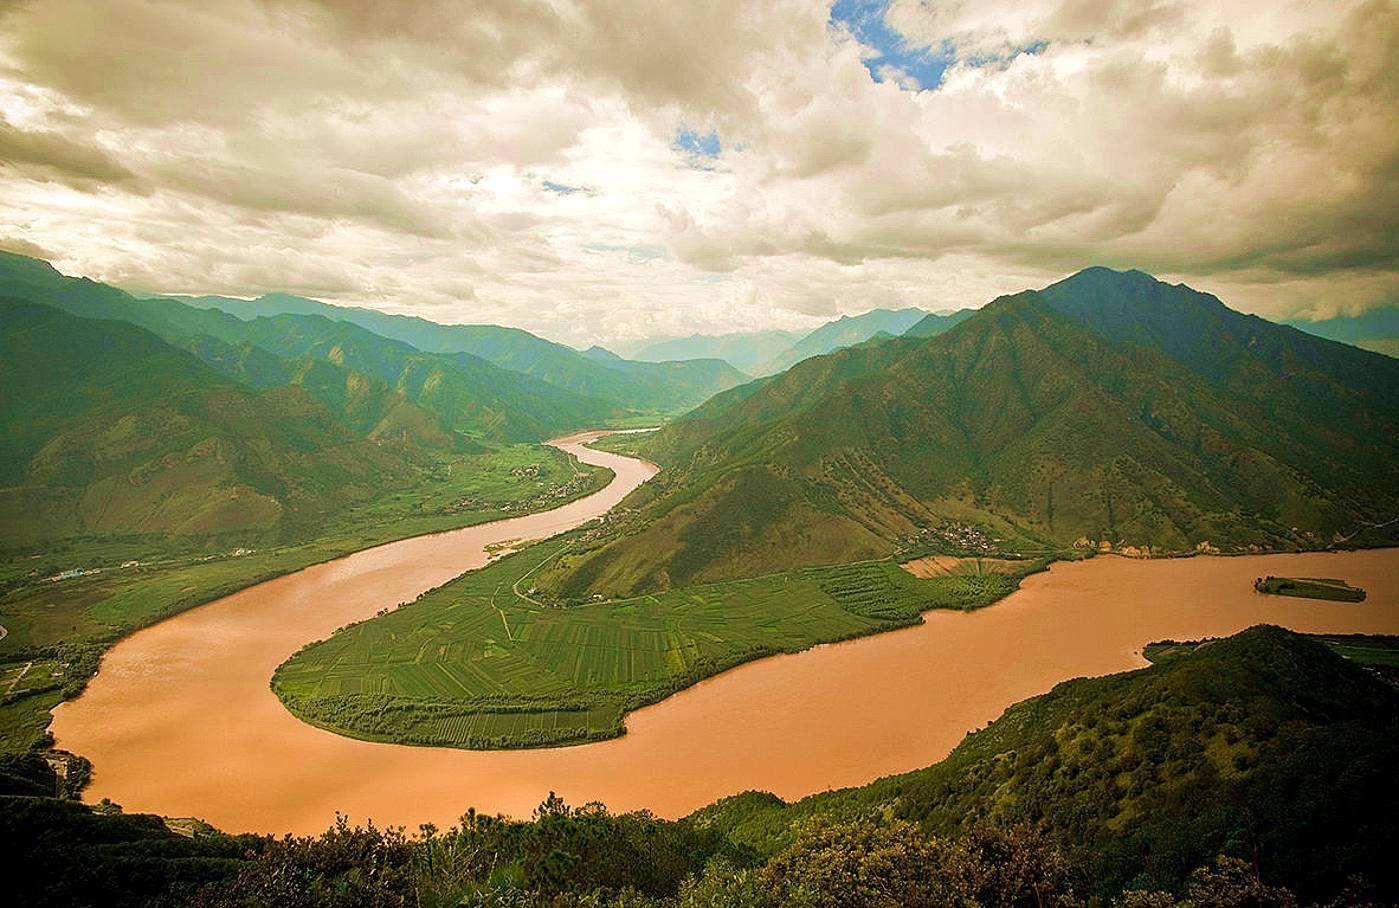 Назовите реки азии. Долина реки Хуанхэ. Реки Китая Янцзы и Хуанхэ. Янцзы Чанцзян река. Евразия река Хуанхэ.